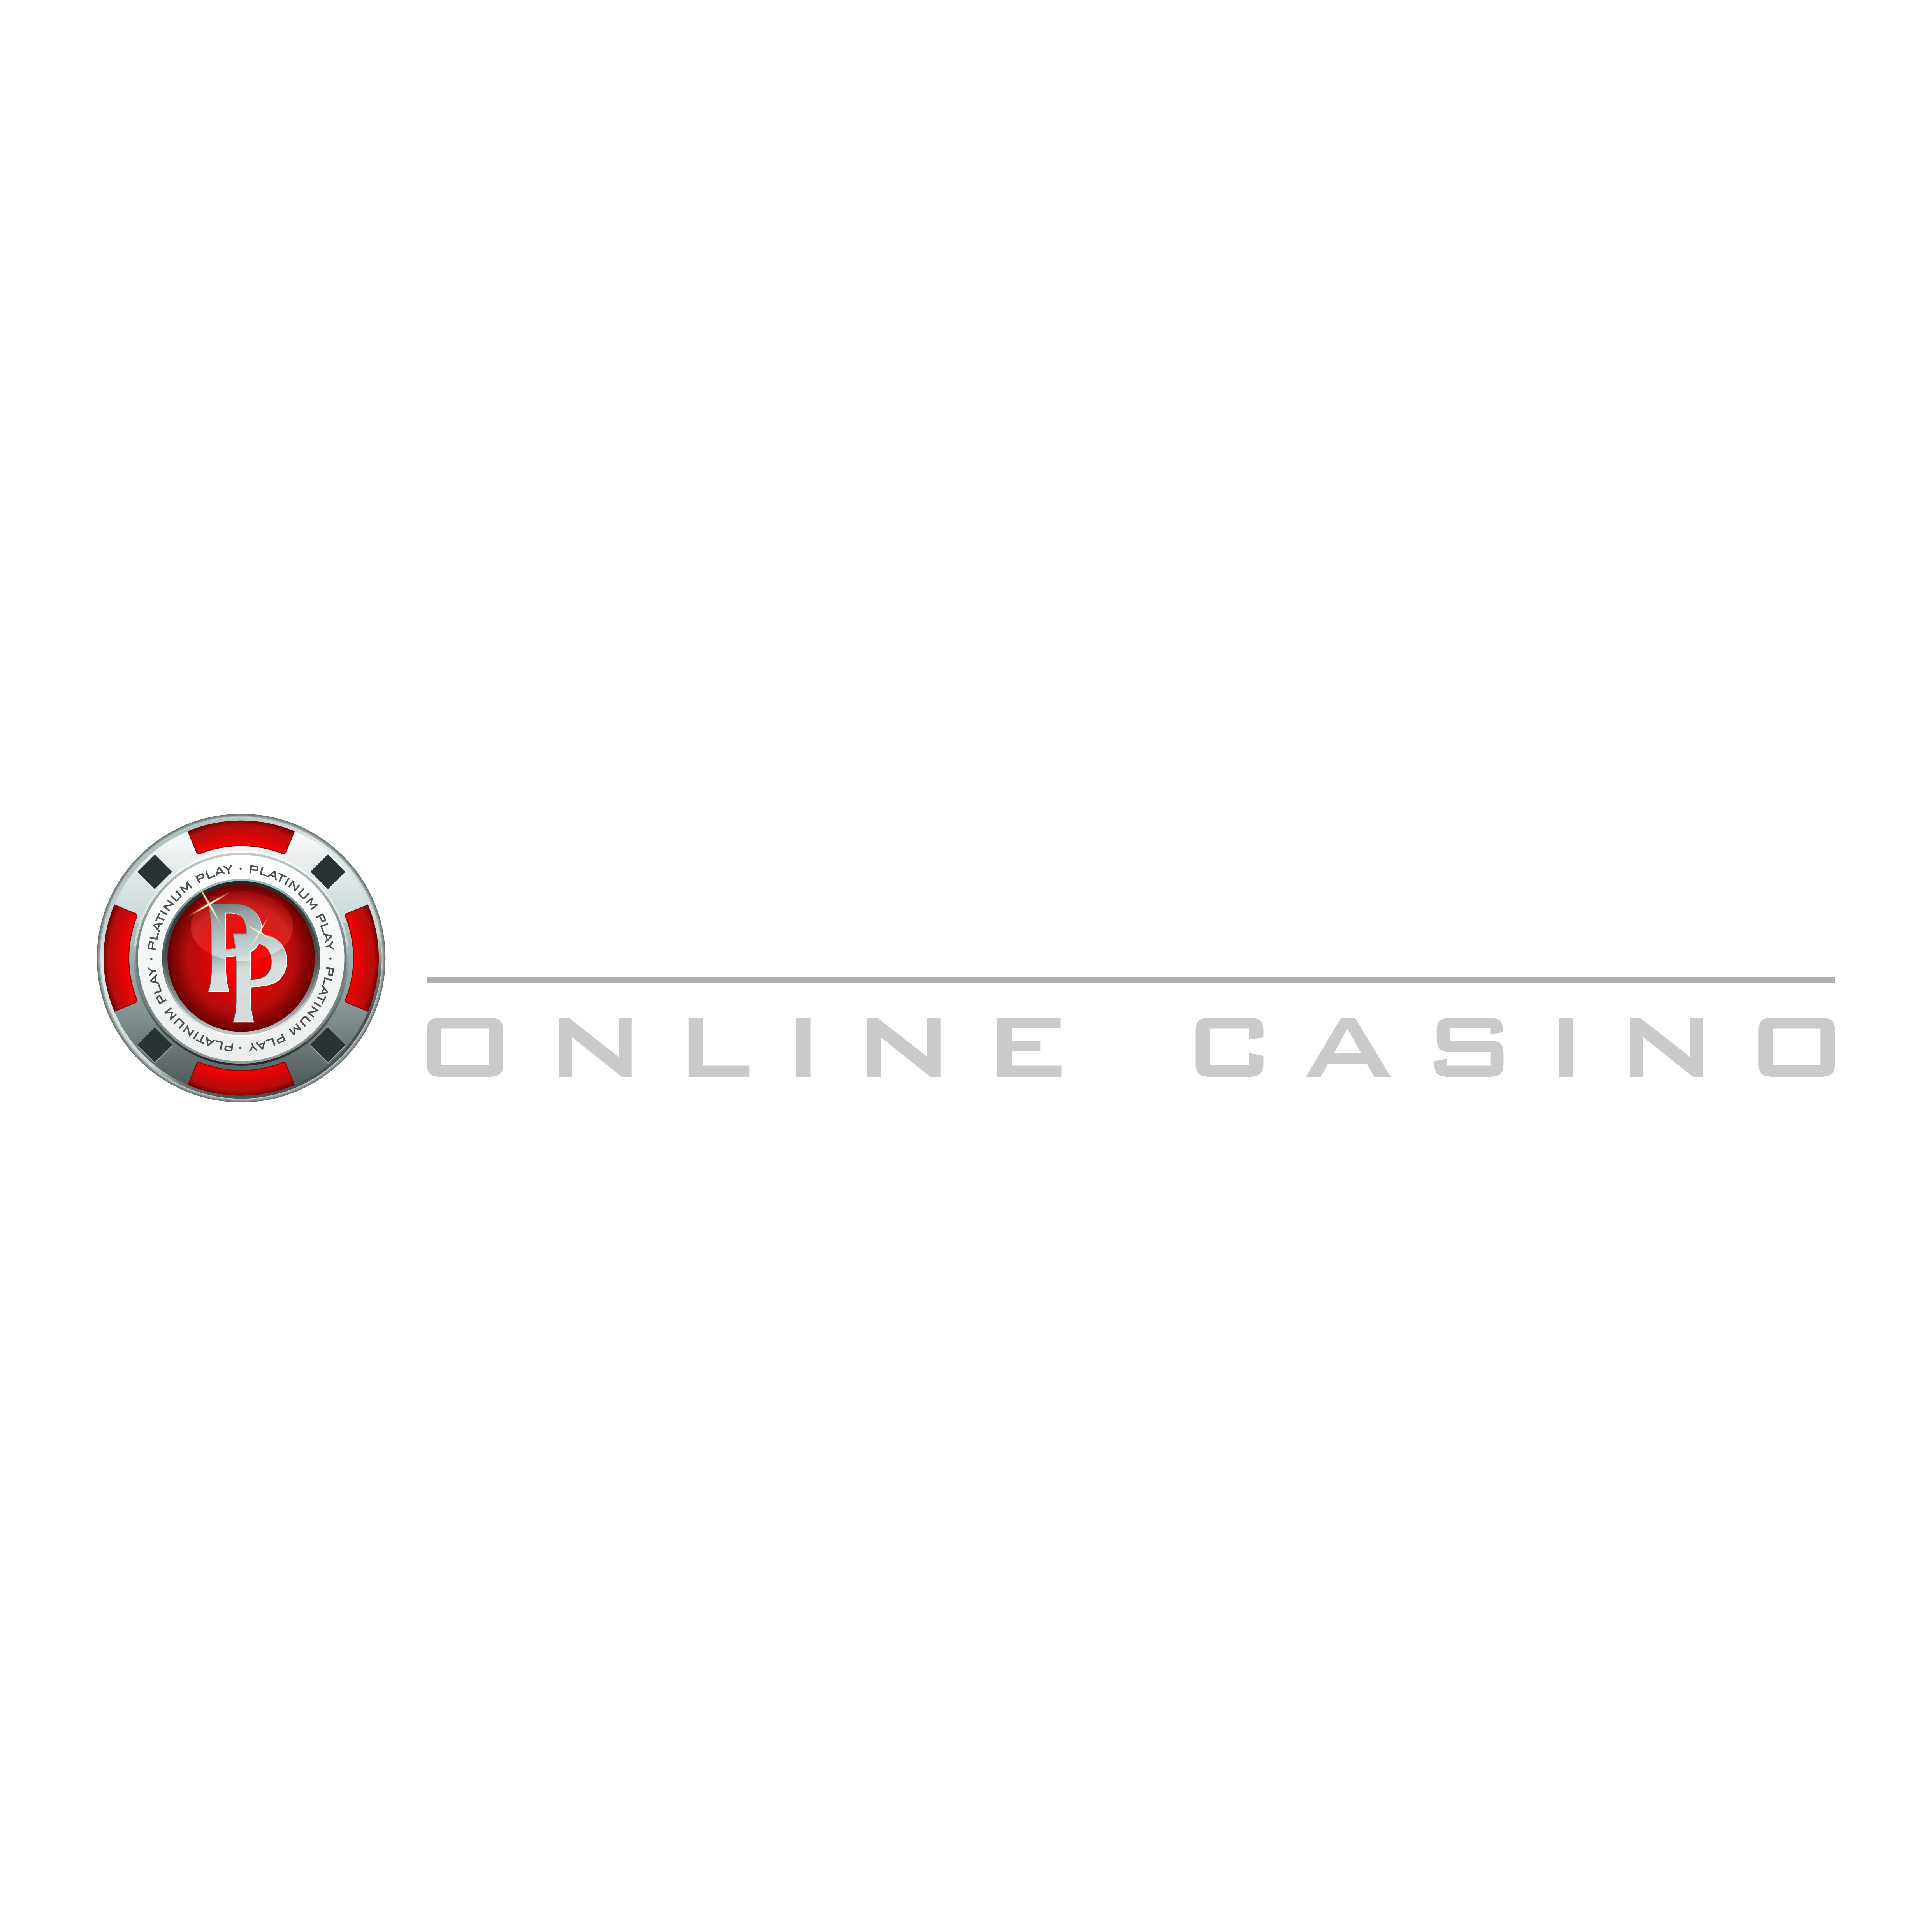 Platinum Play review